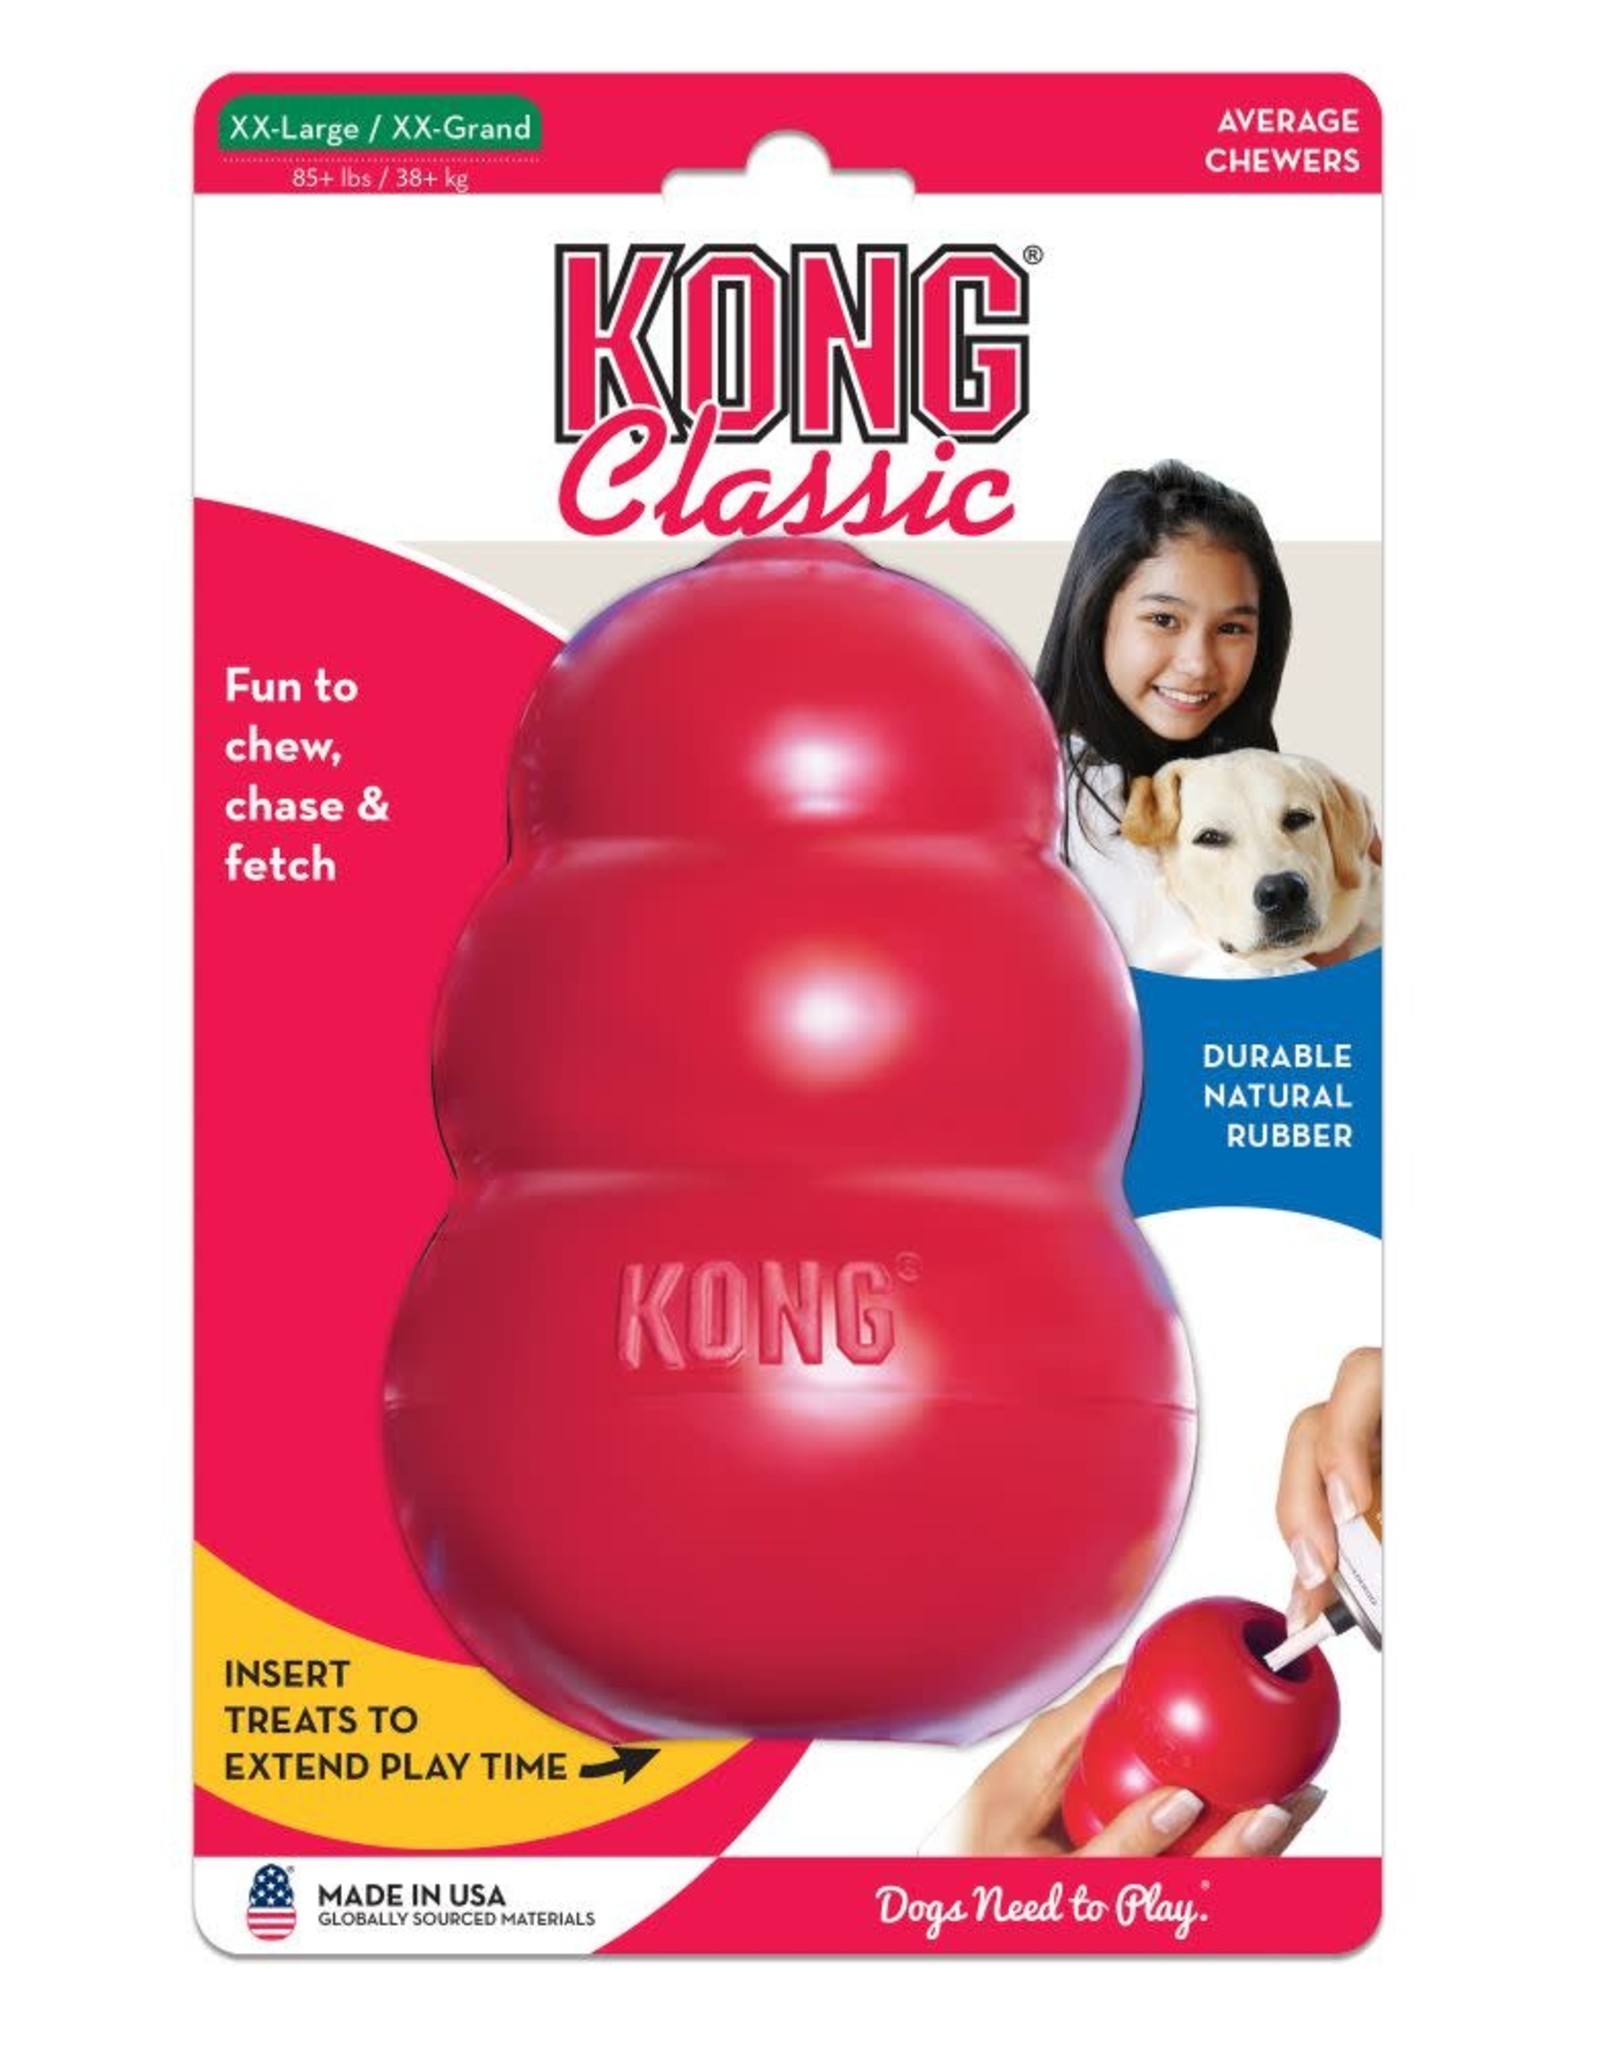 KONG COMPANY Kong ® Classic Red